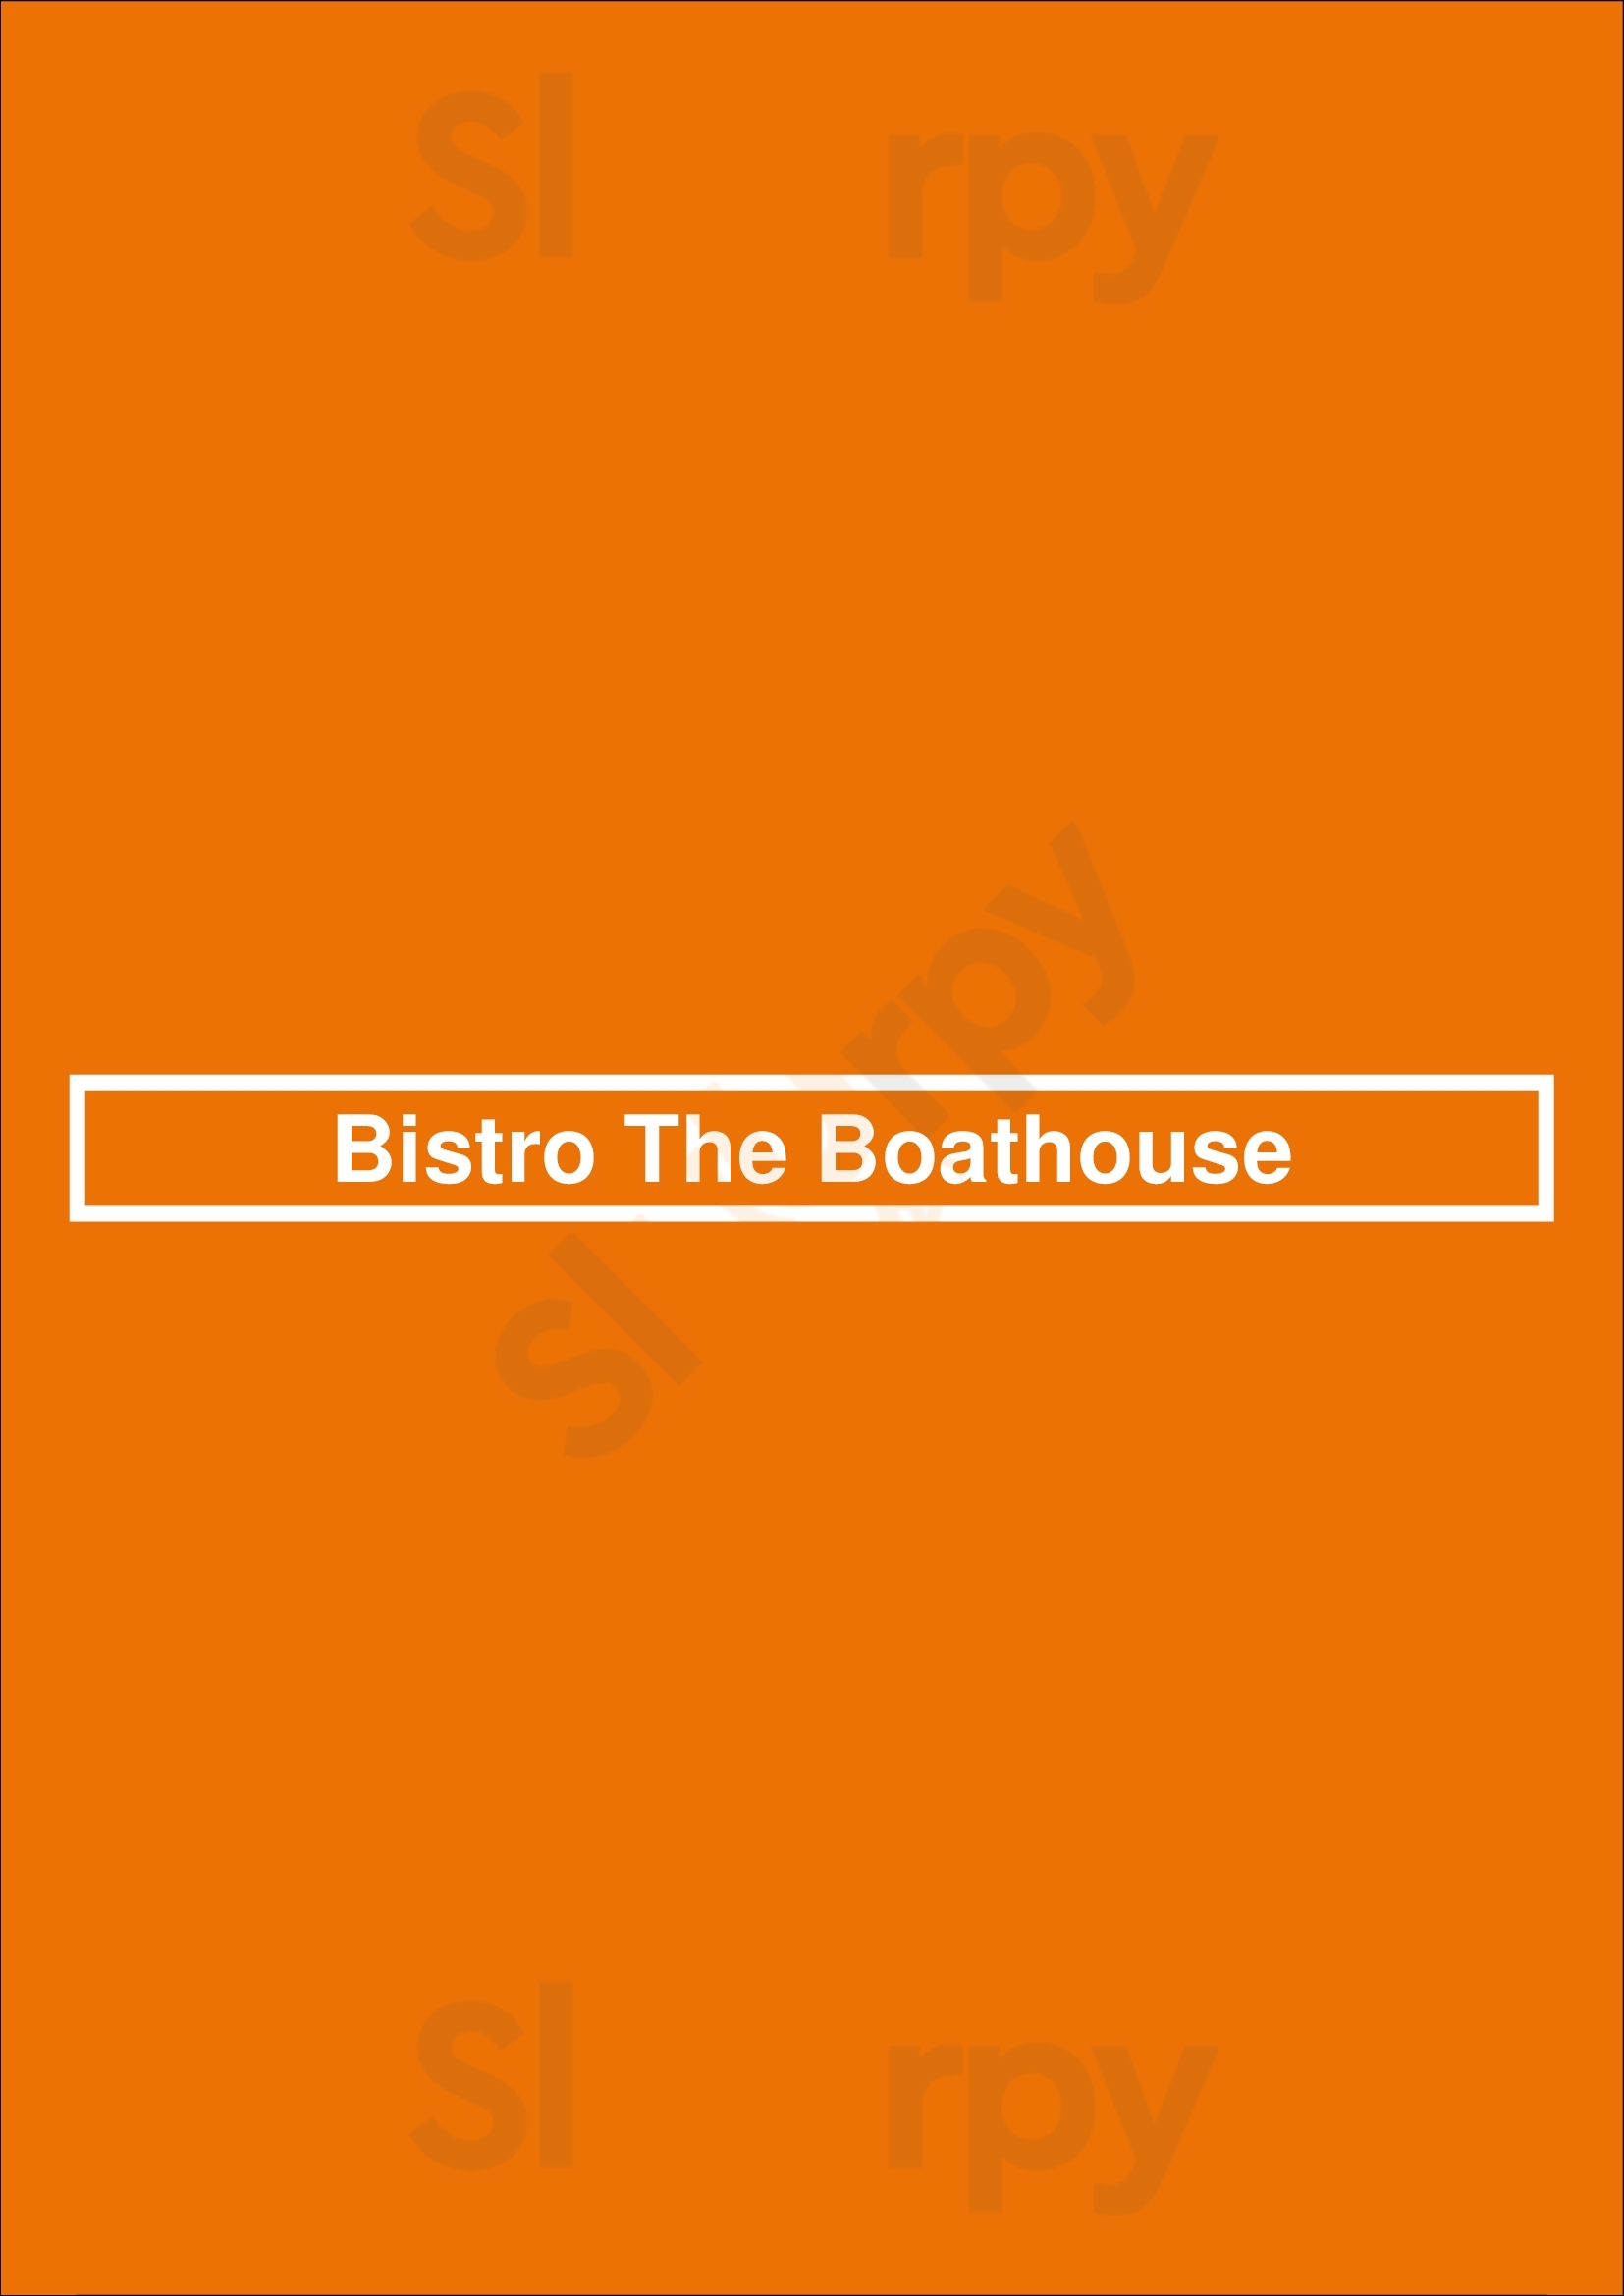 Bistro The Boathouse Willebroek Menu - 1